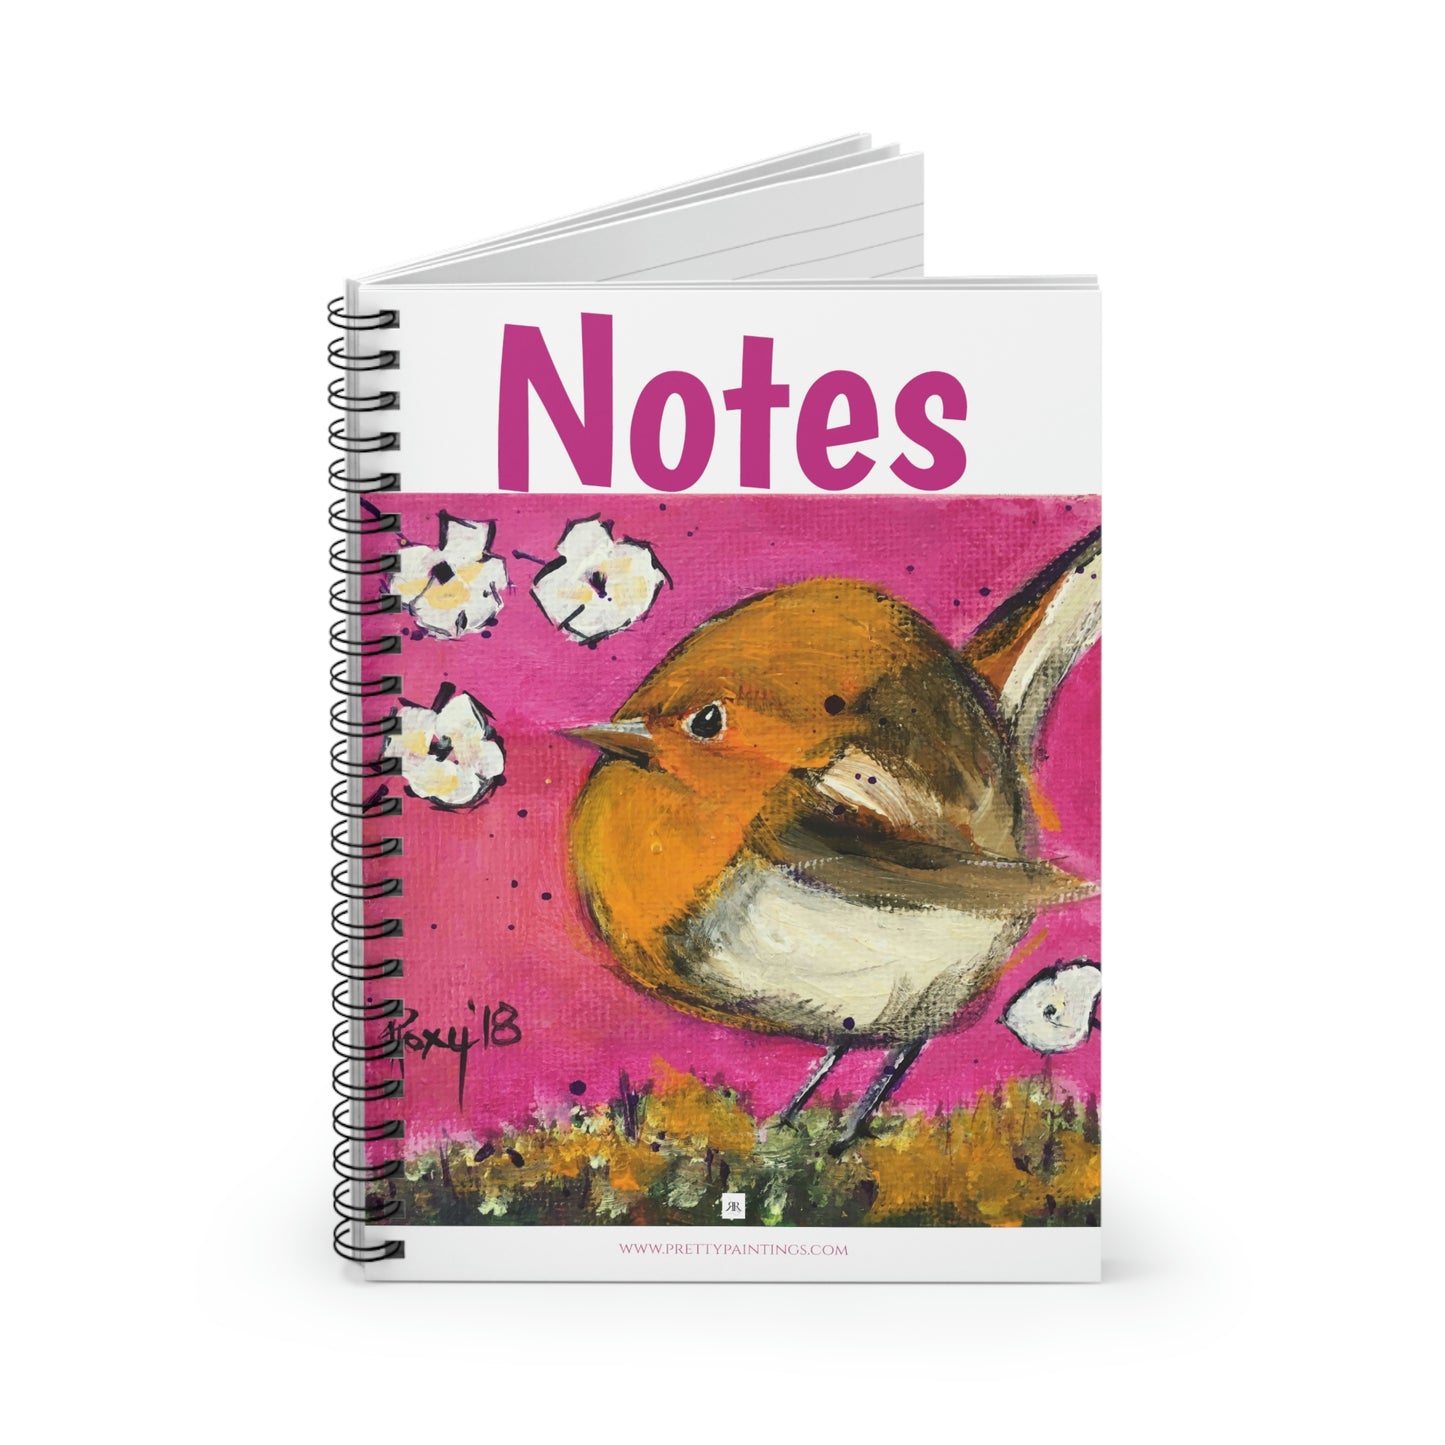 Adorable Whimsical Wren "Notes" Spiral Notebook